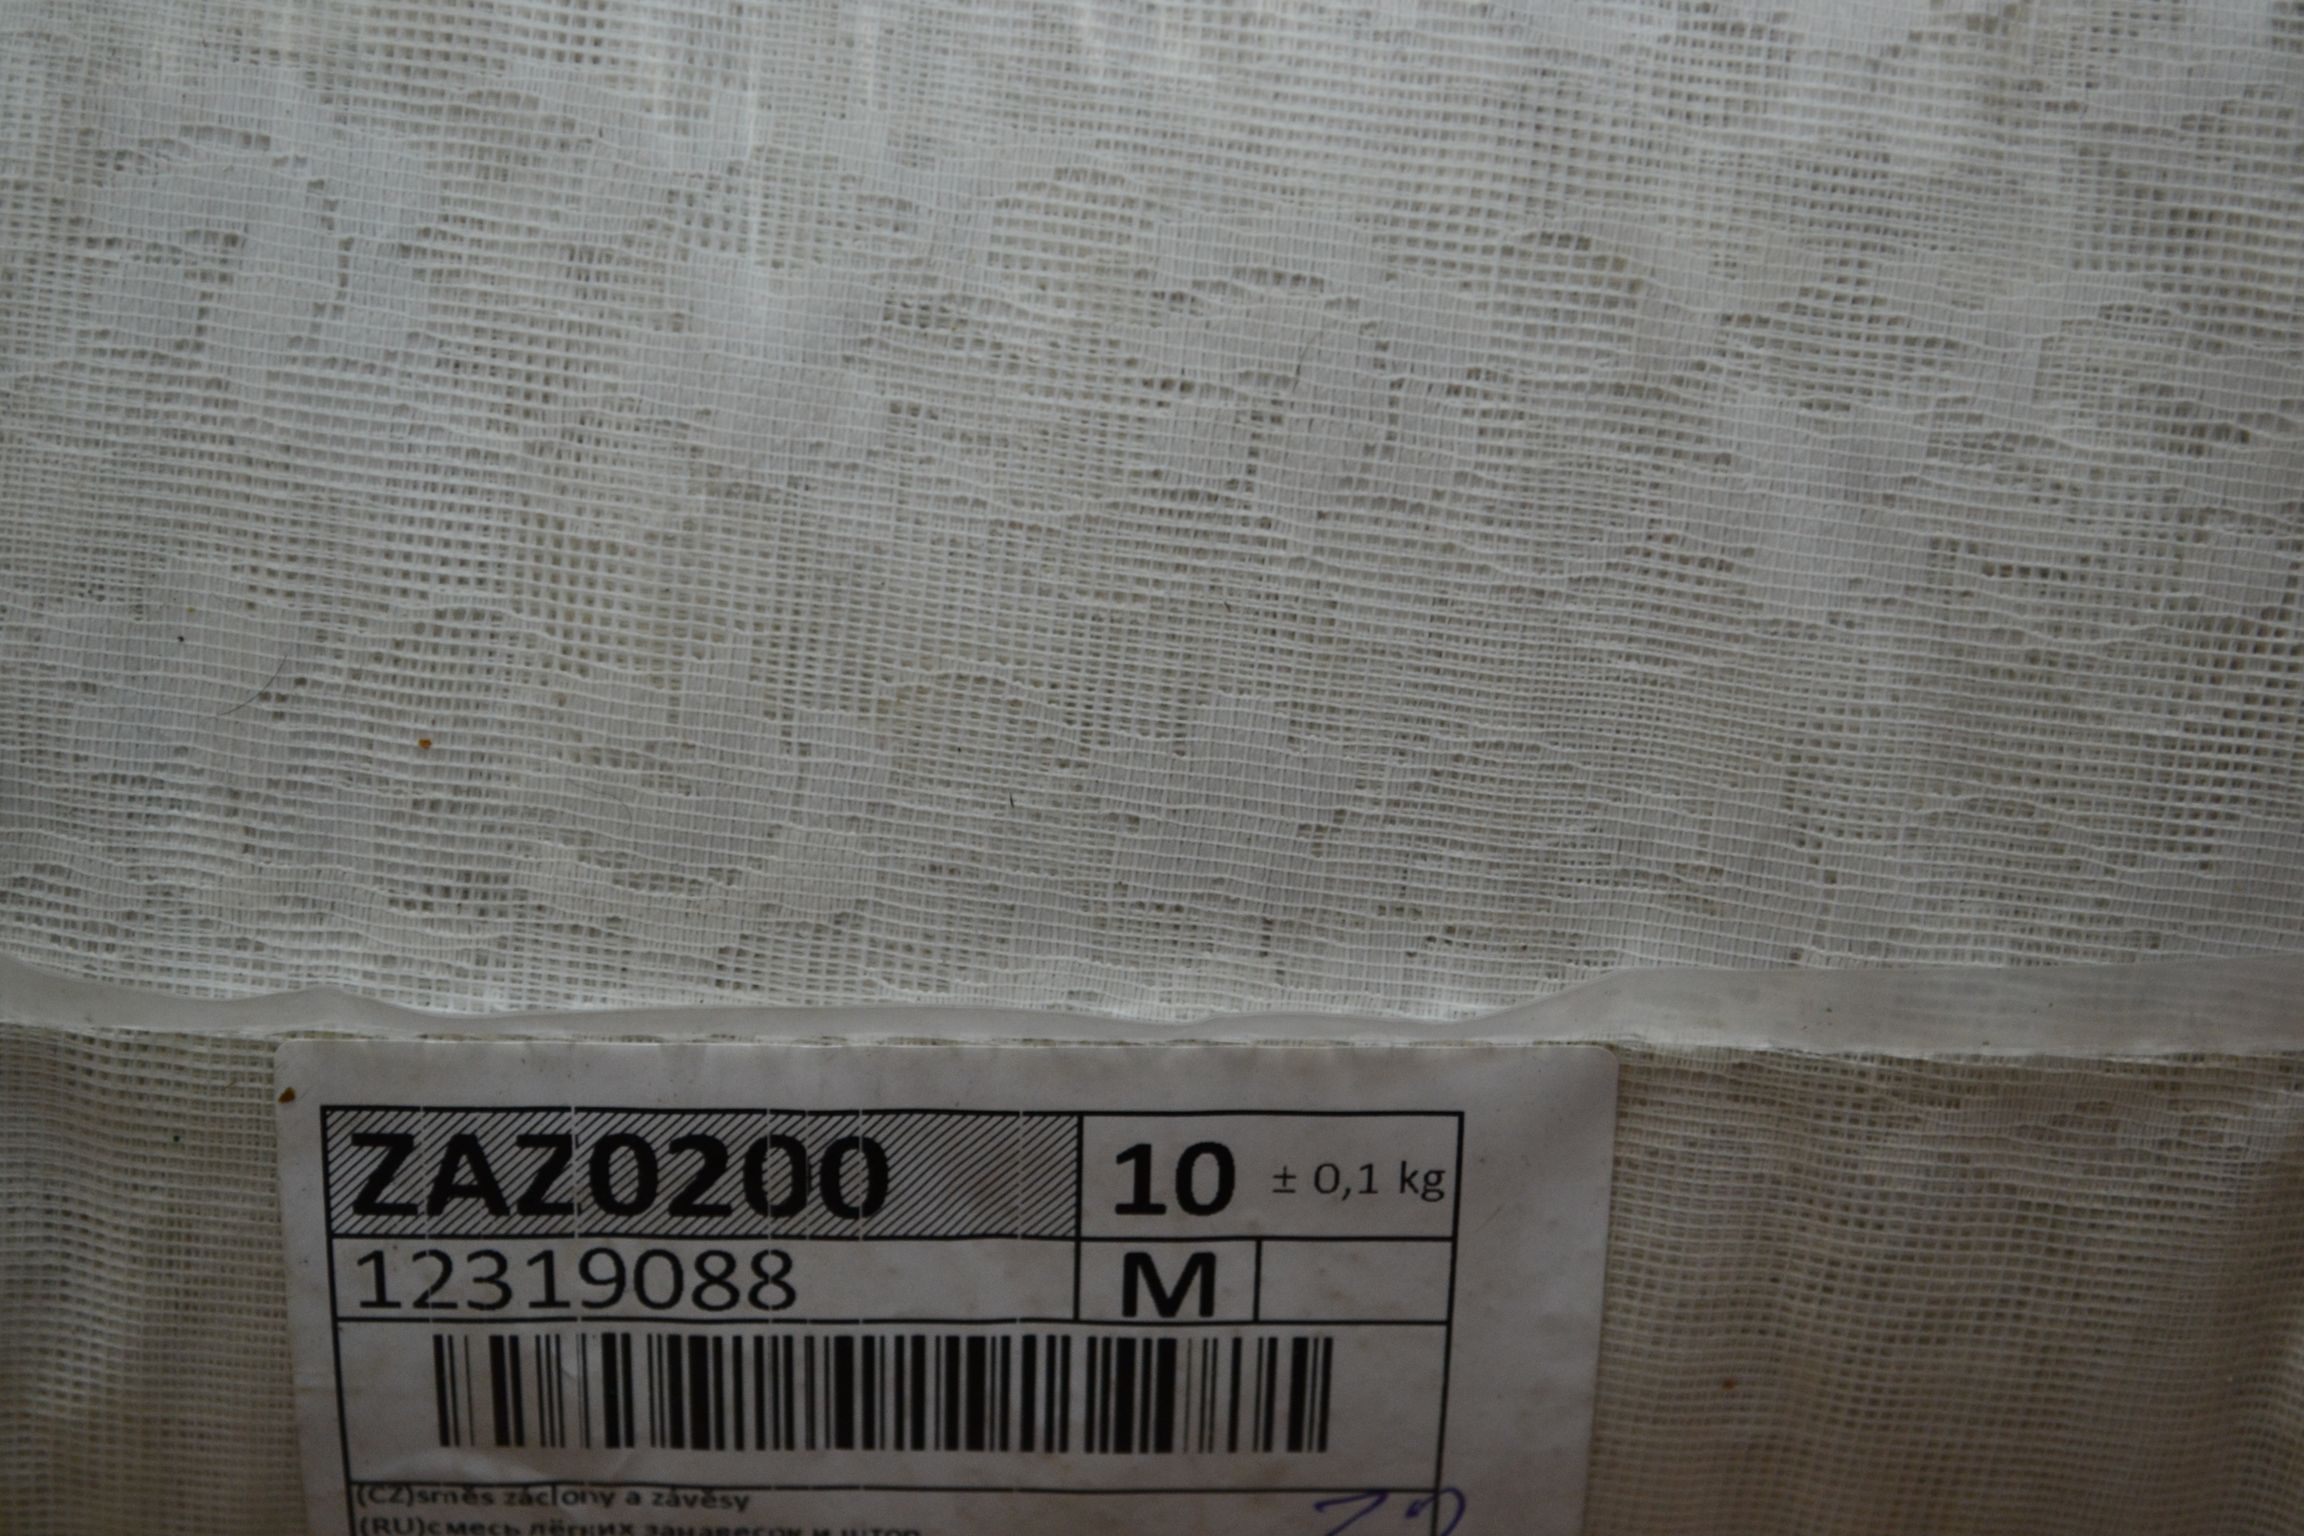 ZAZ0200 Тюль+ шторы;код мешка 12319088